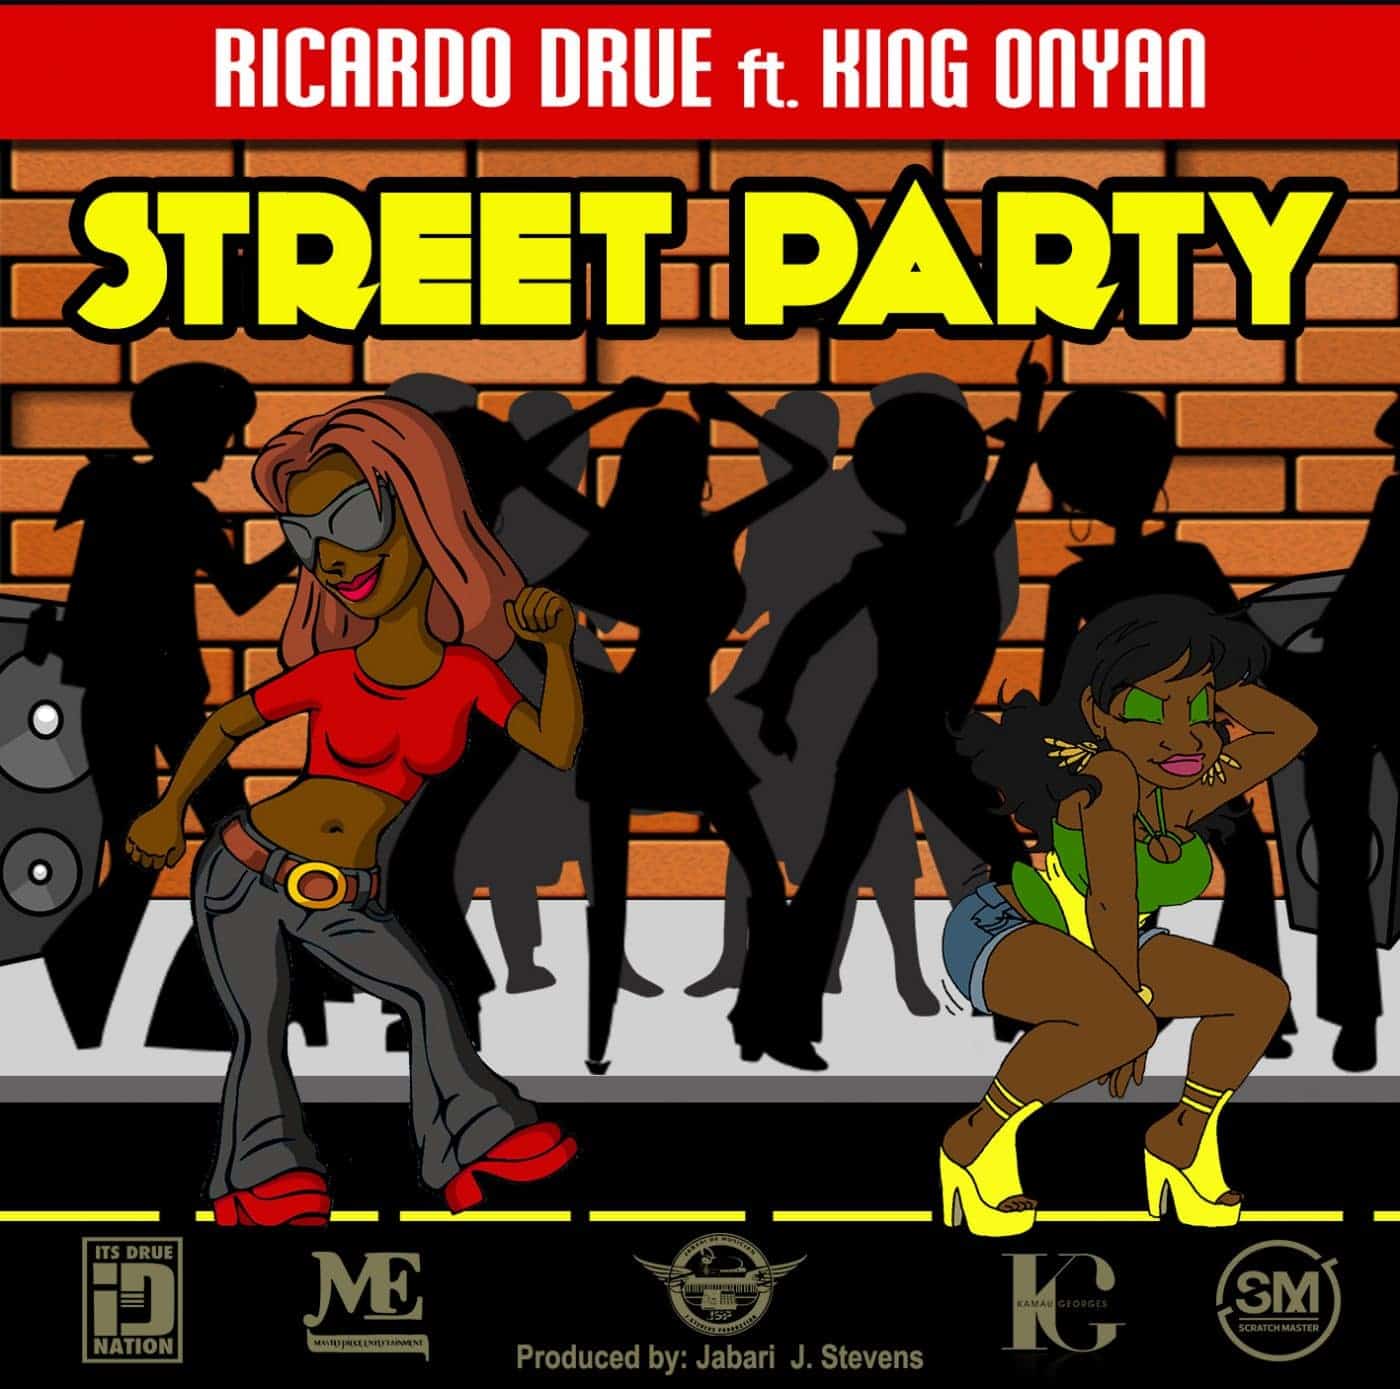 Ricardo Drue ft King Onyan - Street Party